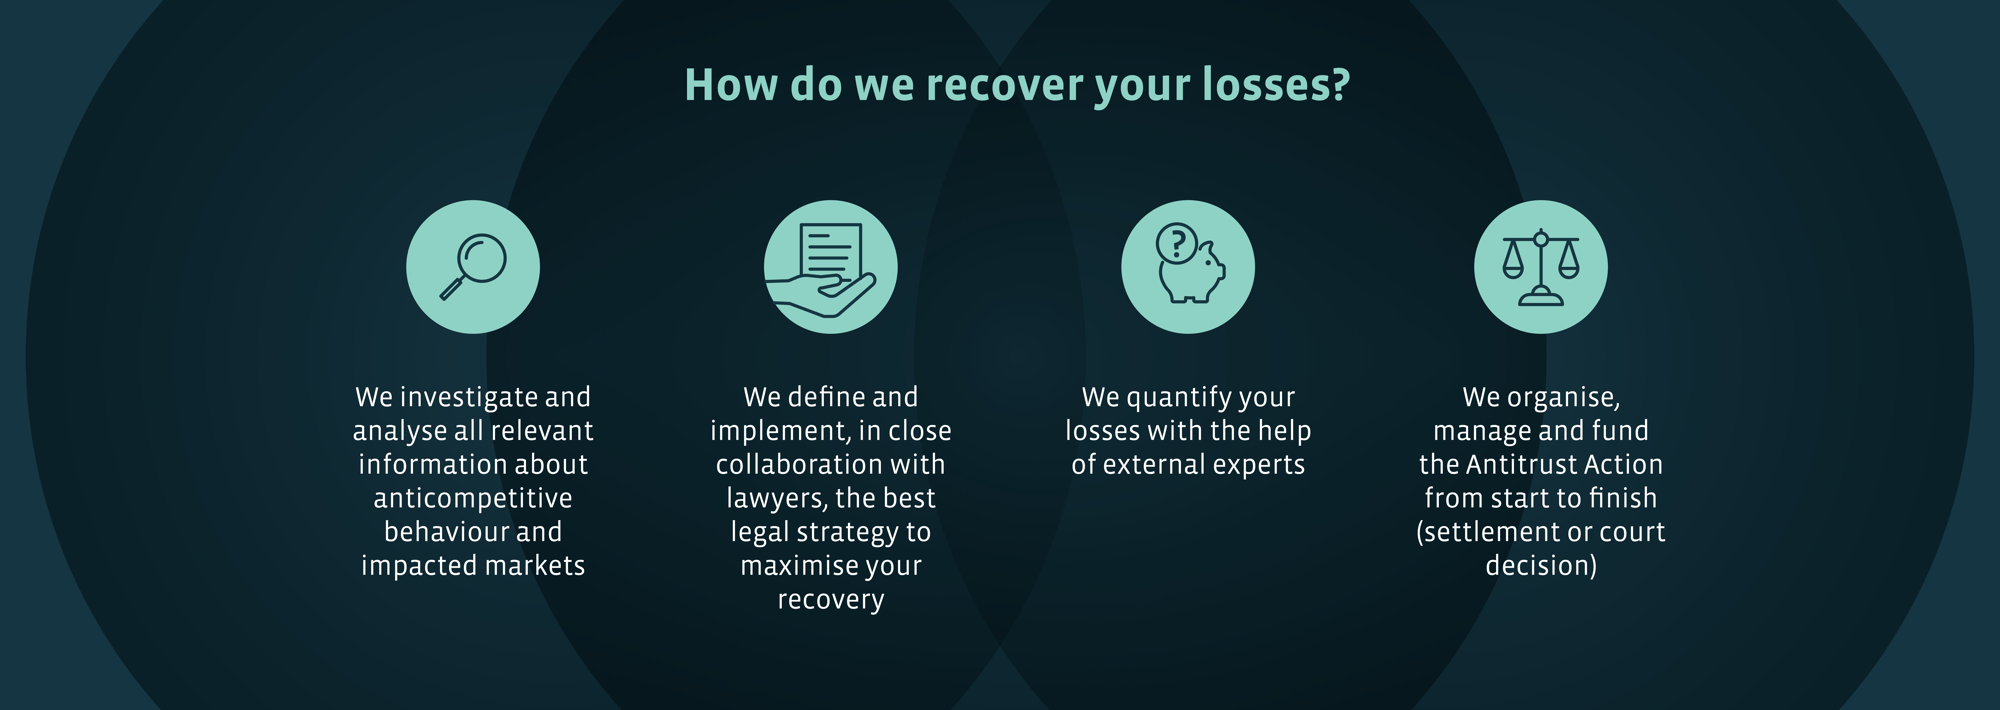 DEM-Antitrust Actions presentation - How do we recover your lose - V2